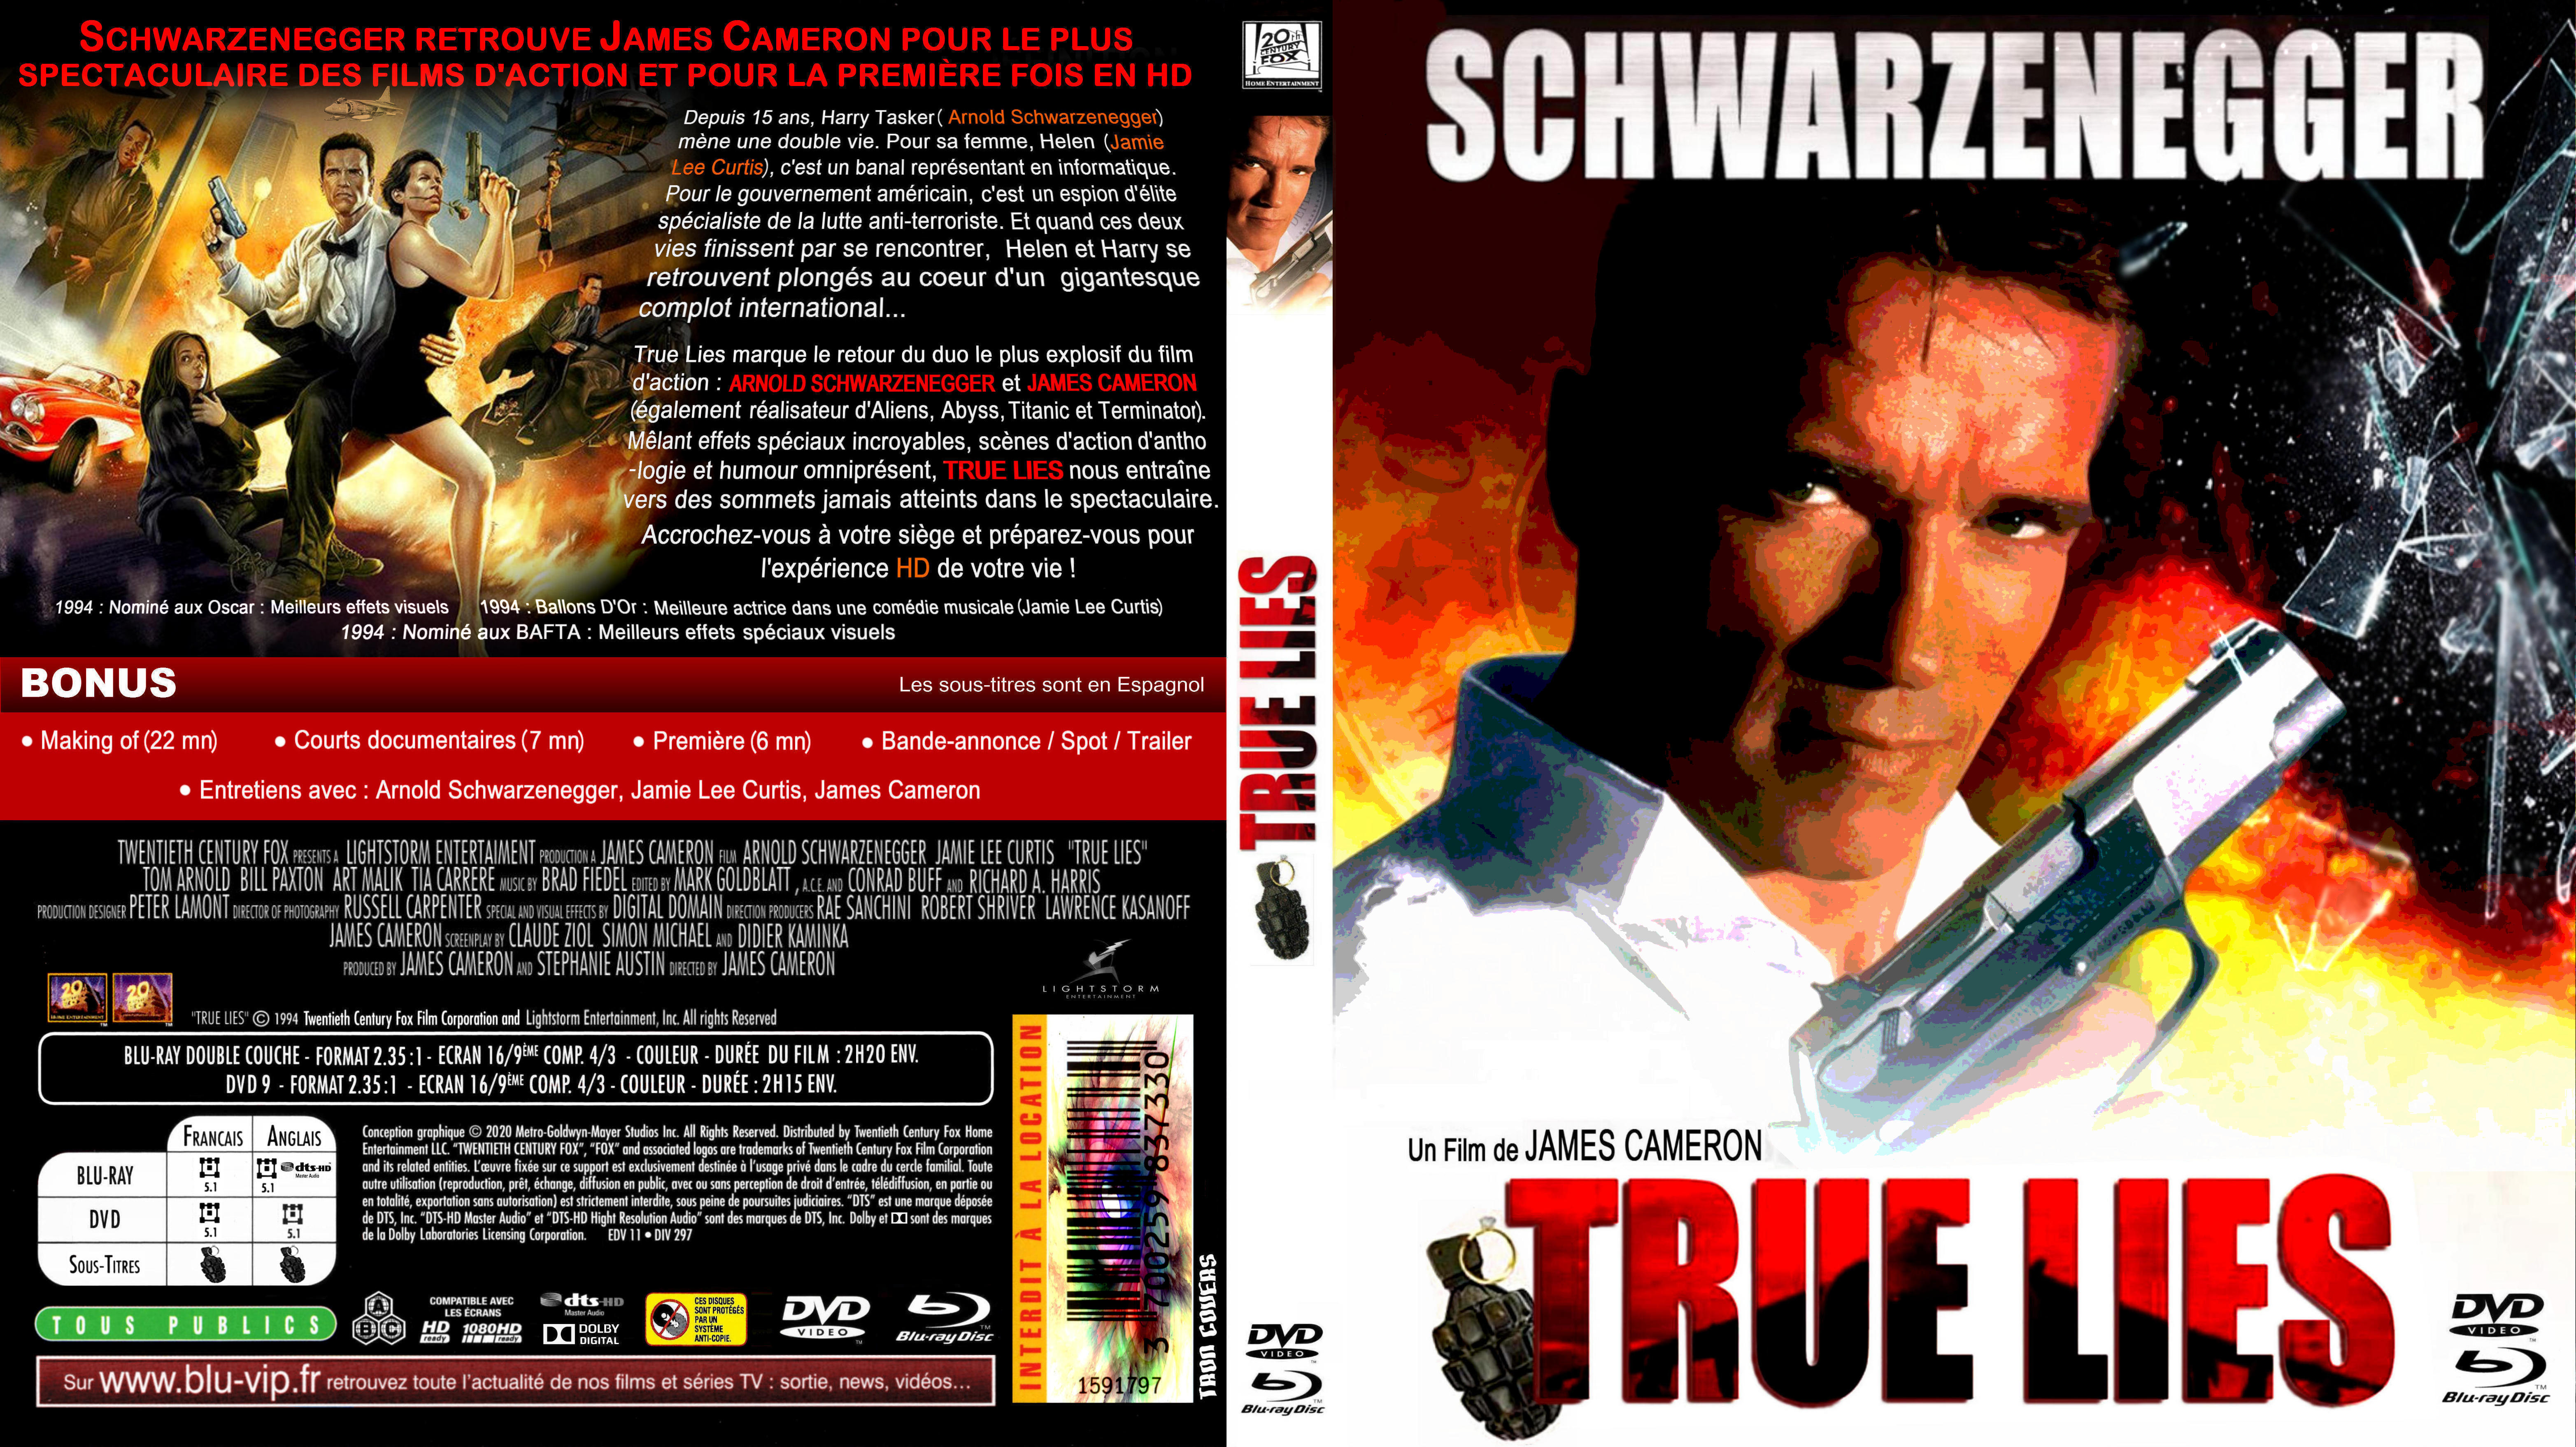 Jaquette DVD True Lies custom (BLU-RAY) v2